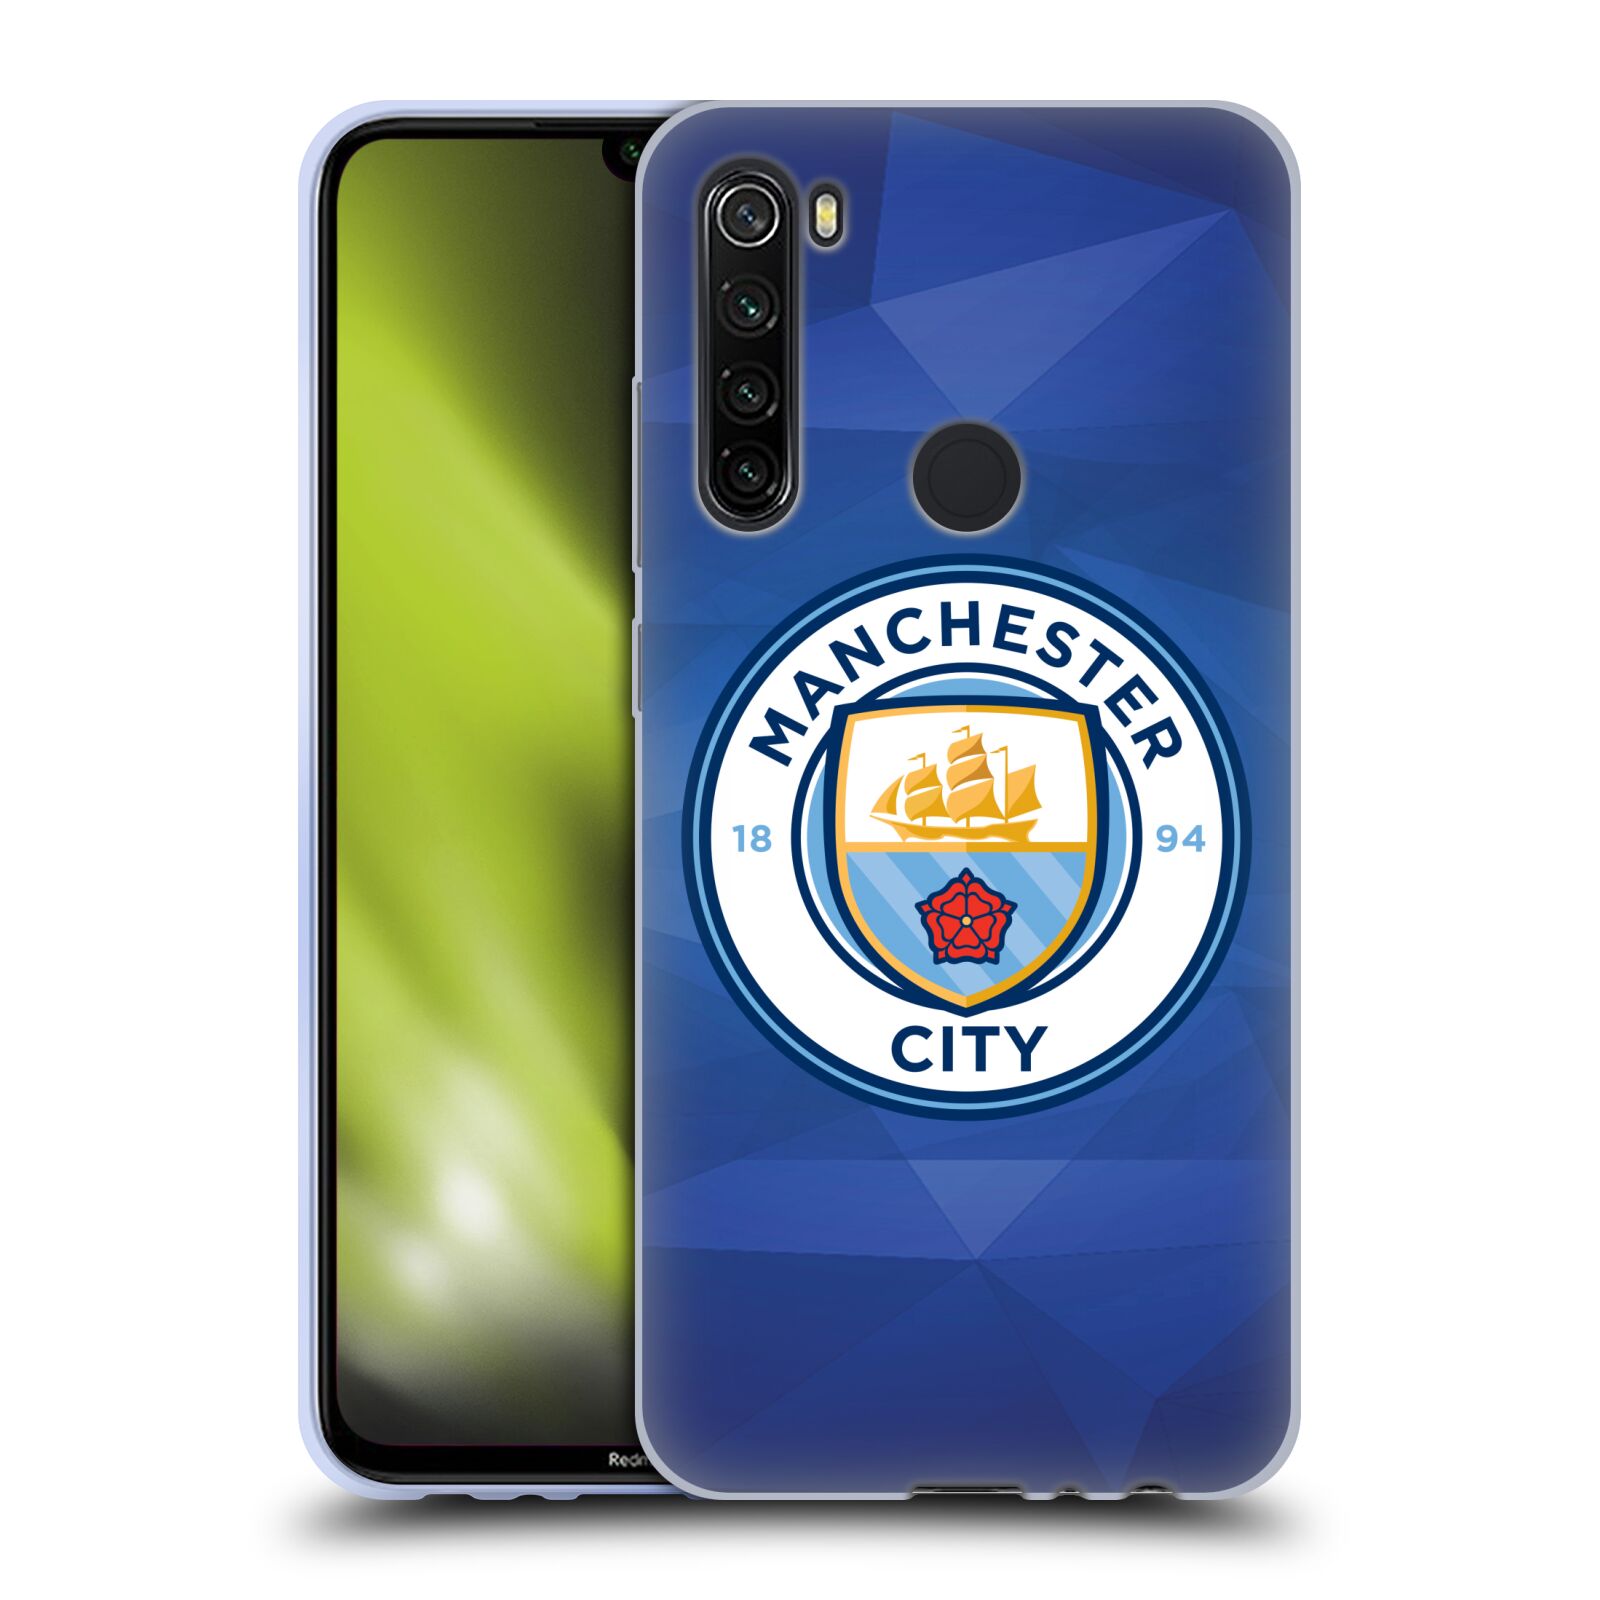 Silikonové pouzdro na mobil Xiaomi Redmi Note 8T - Head Case - Manchester City FC - Modré nové logo (Silikonový kryt, obal, pouzdro na mobilní telefon Xiaomi Redmi Note 8T s motivem Manchester City FC - Modré nové logo)